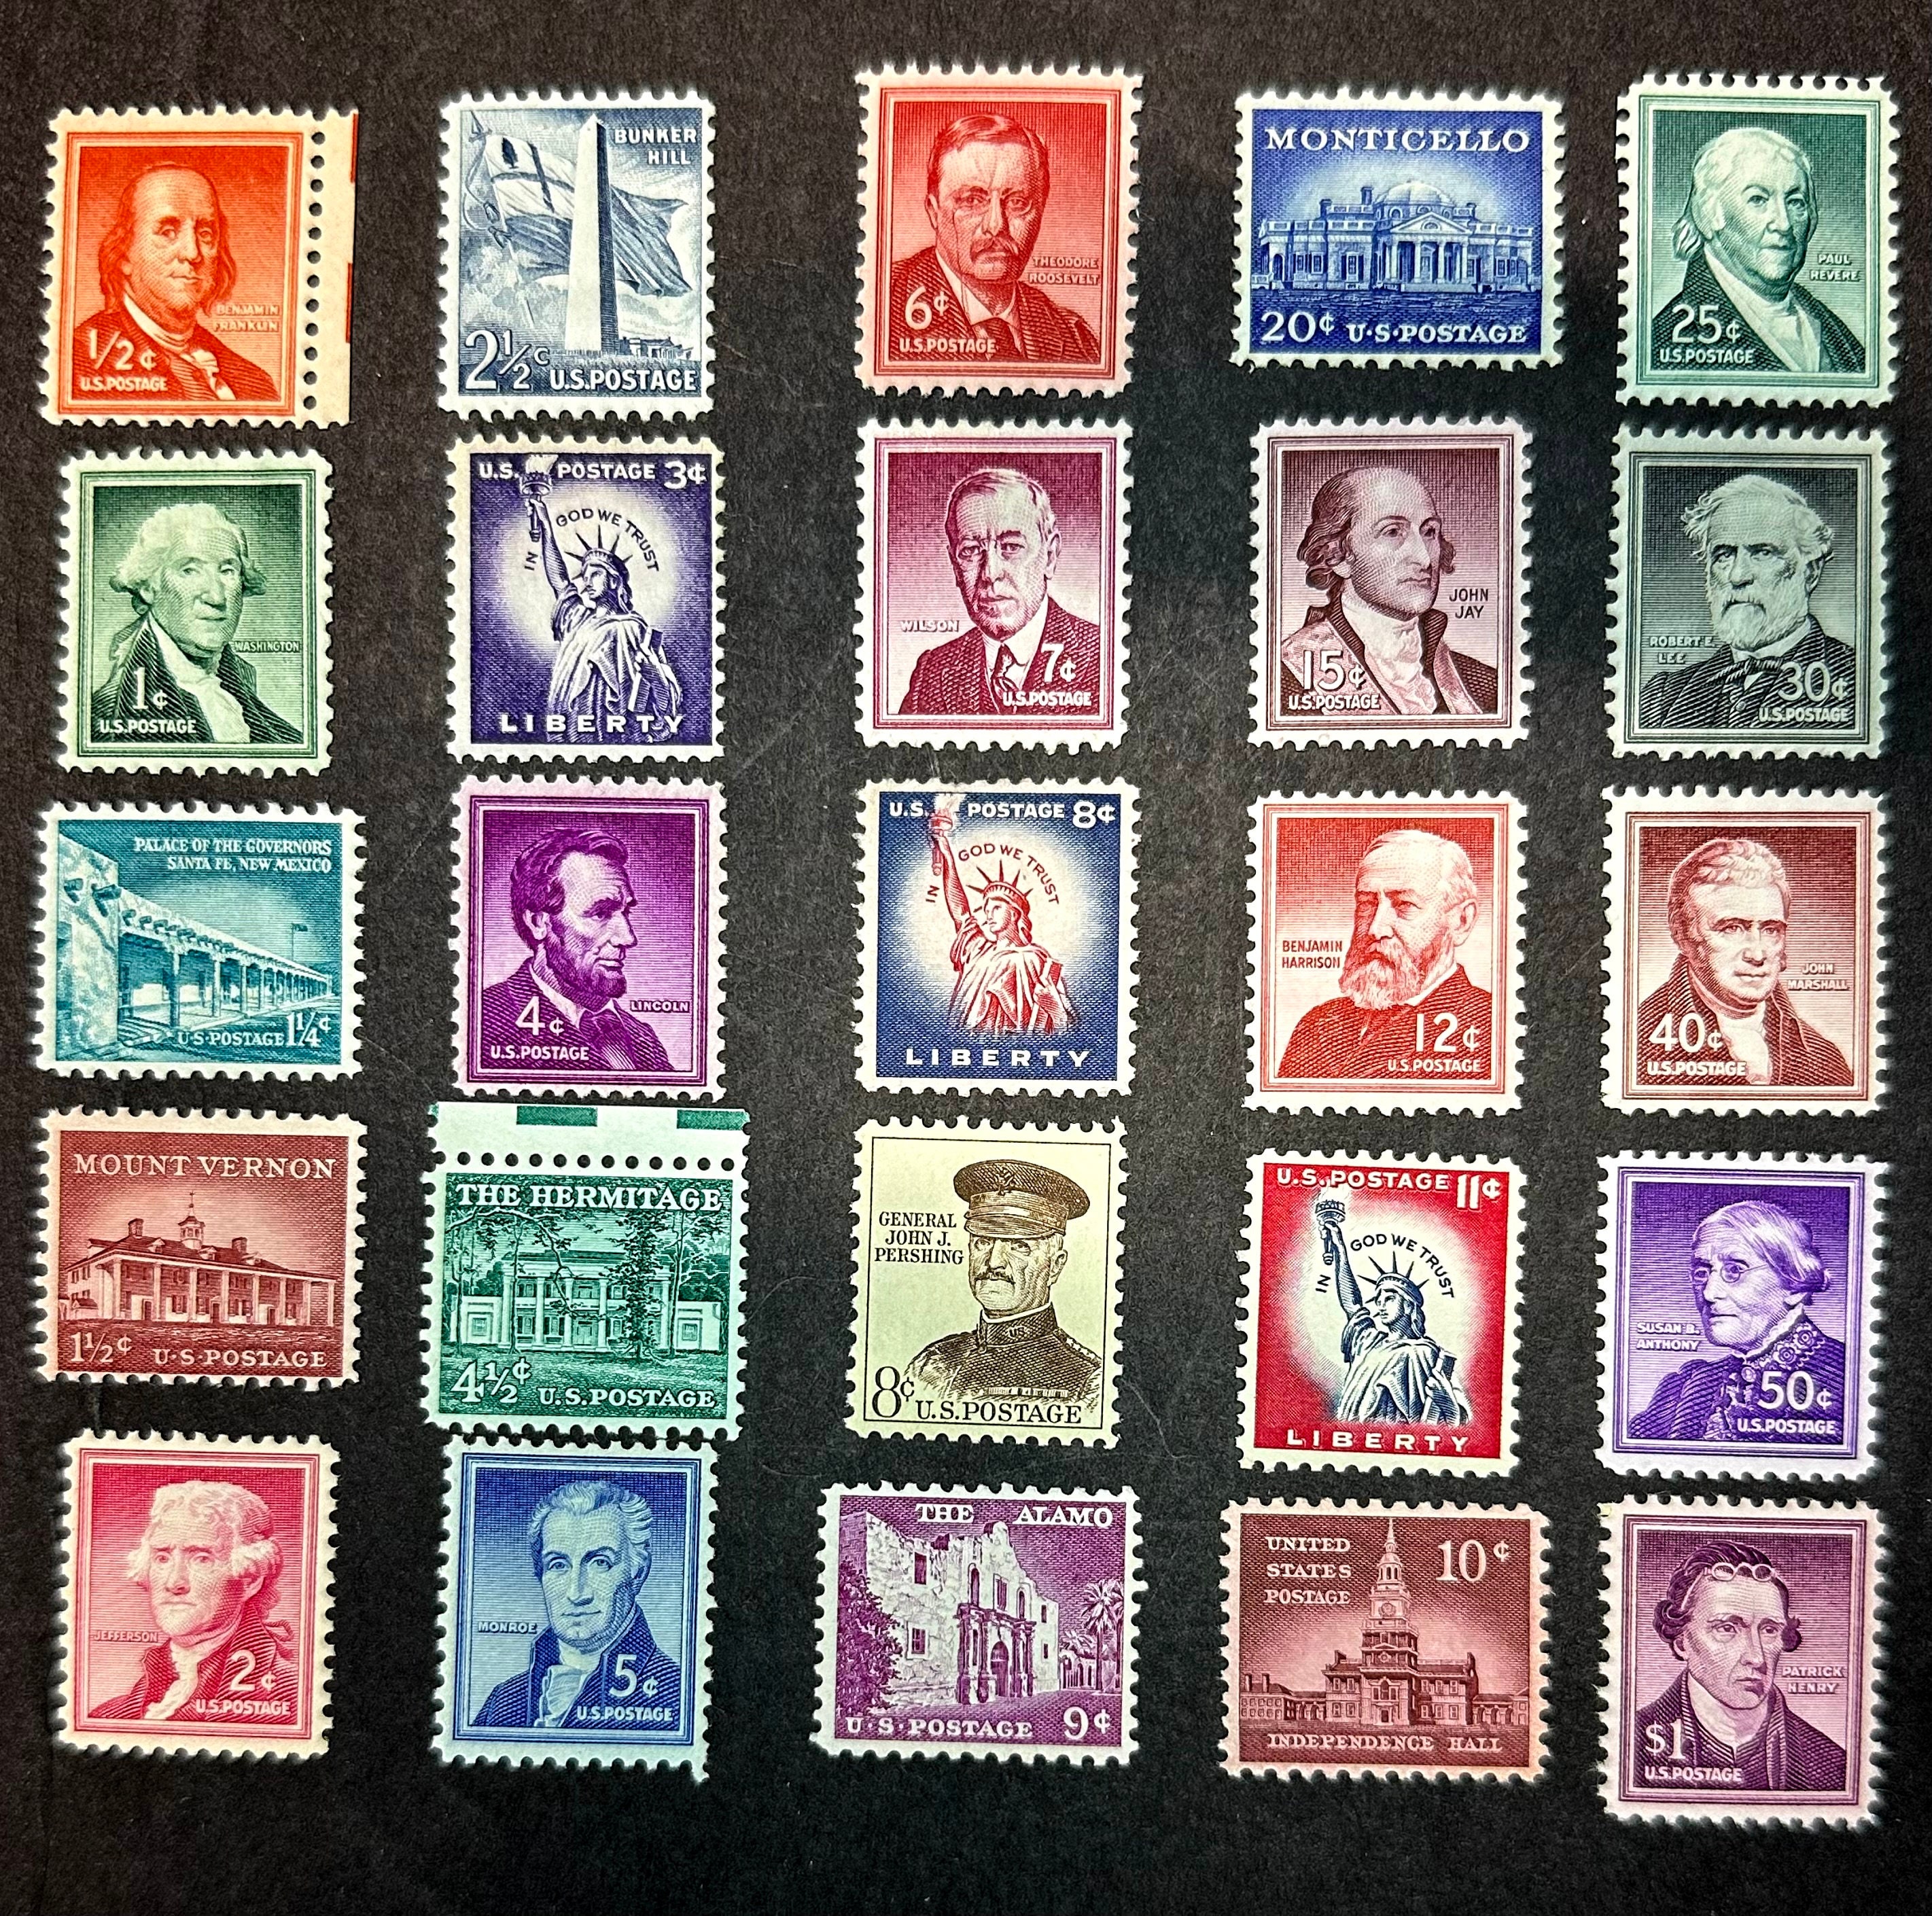 Ohio Statehood 3c Unused Vintage 1953 Postage Stamps for Mailing Collecting  Crafts. Scott Catalog 1018 